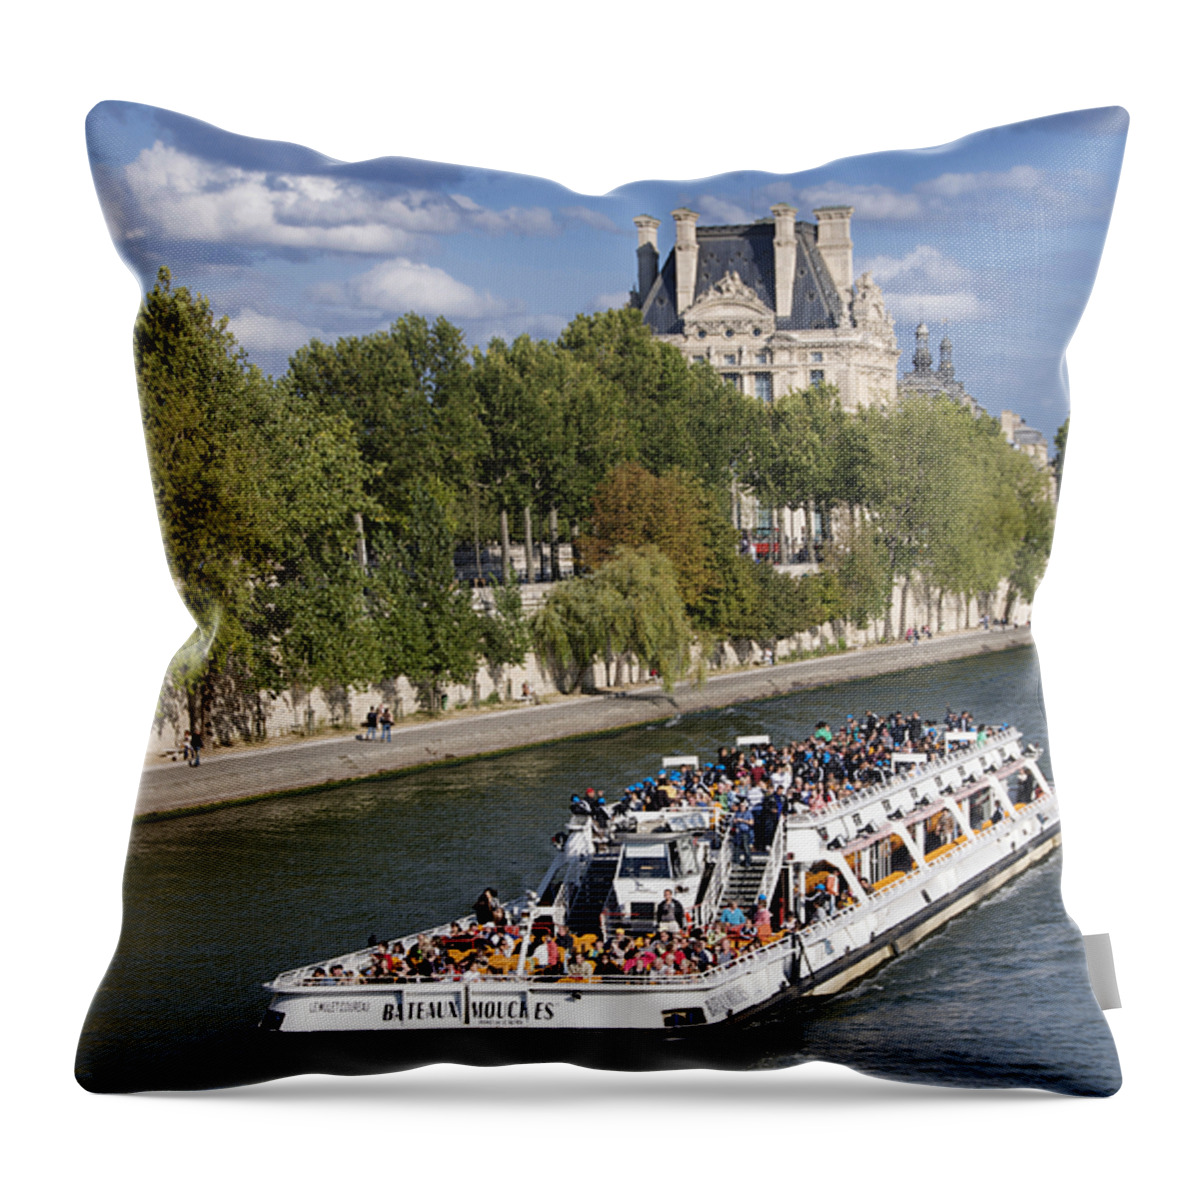 Paris Throw Pillow featuring the photograph Sightseeing boat on river Seine to Louvre museum. Paris #1 by Bernard Jaubert